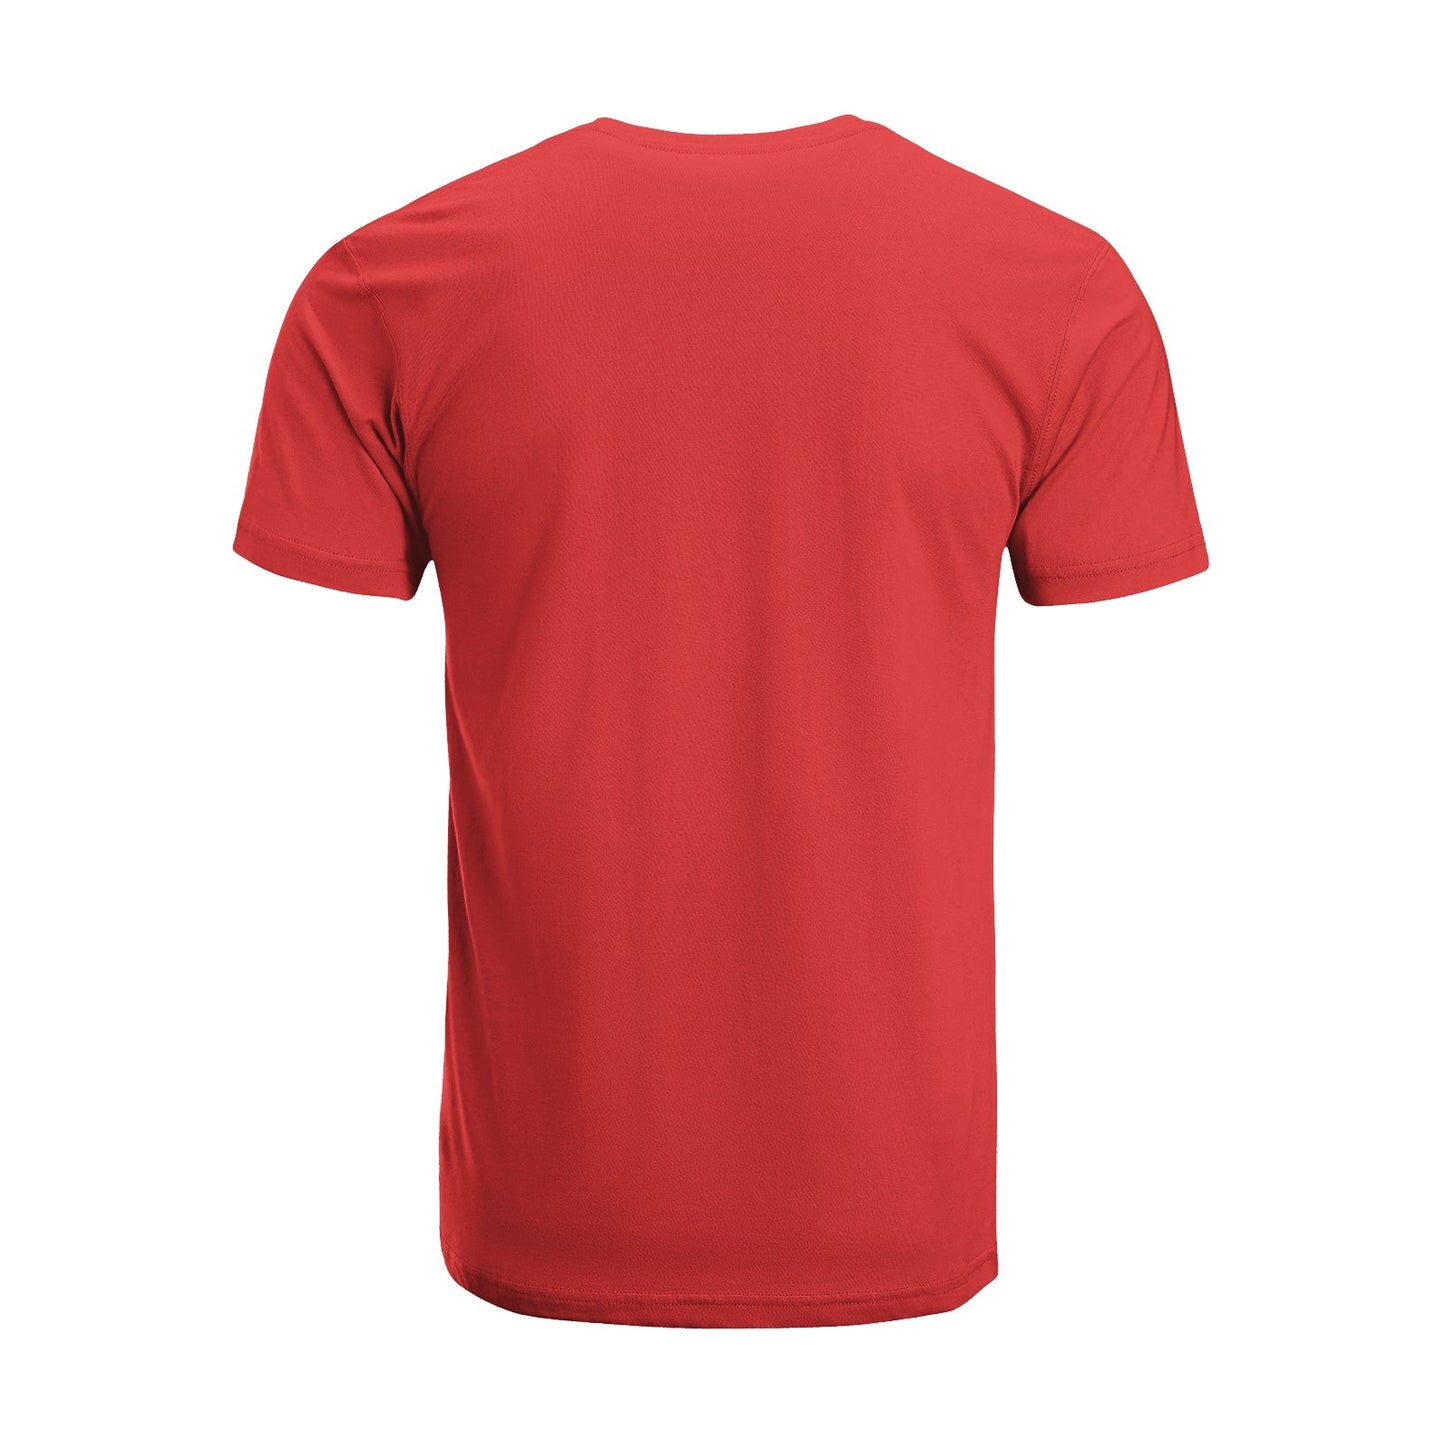 Unisex Short Sleeve Crew Neck Cotton Jersey T-Shirt MOM 05